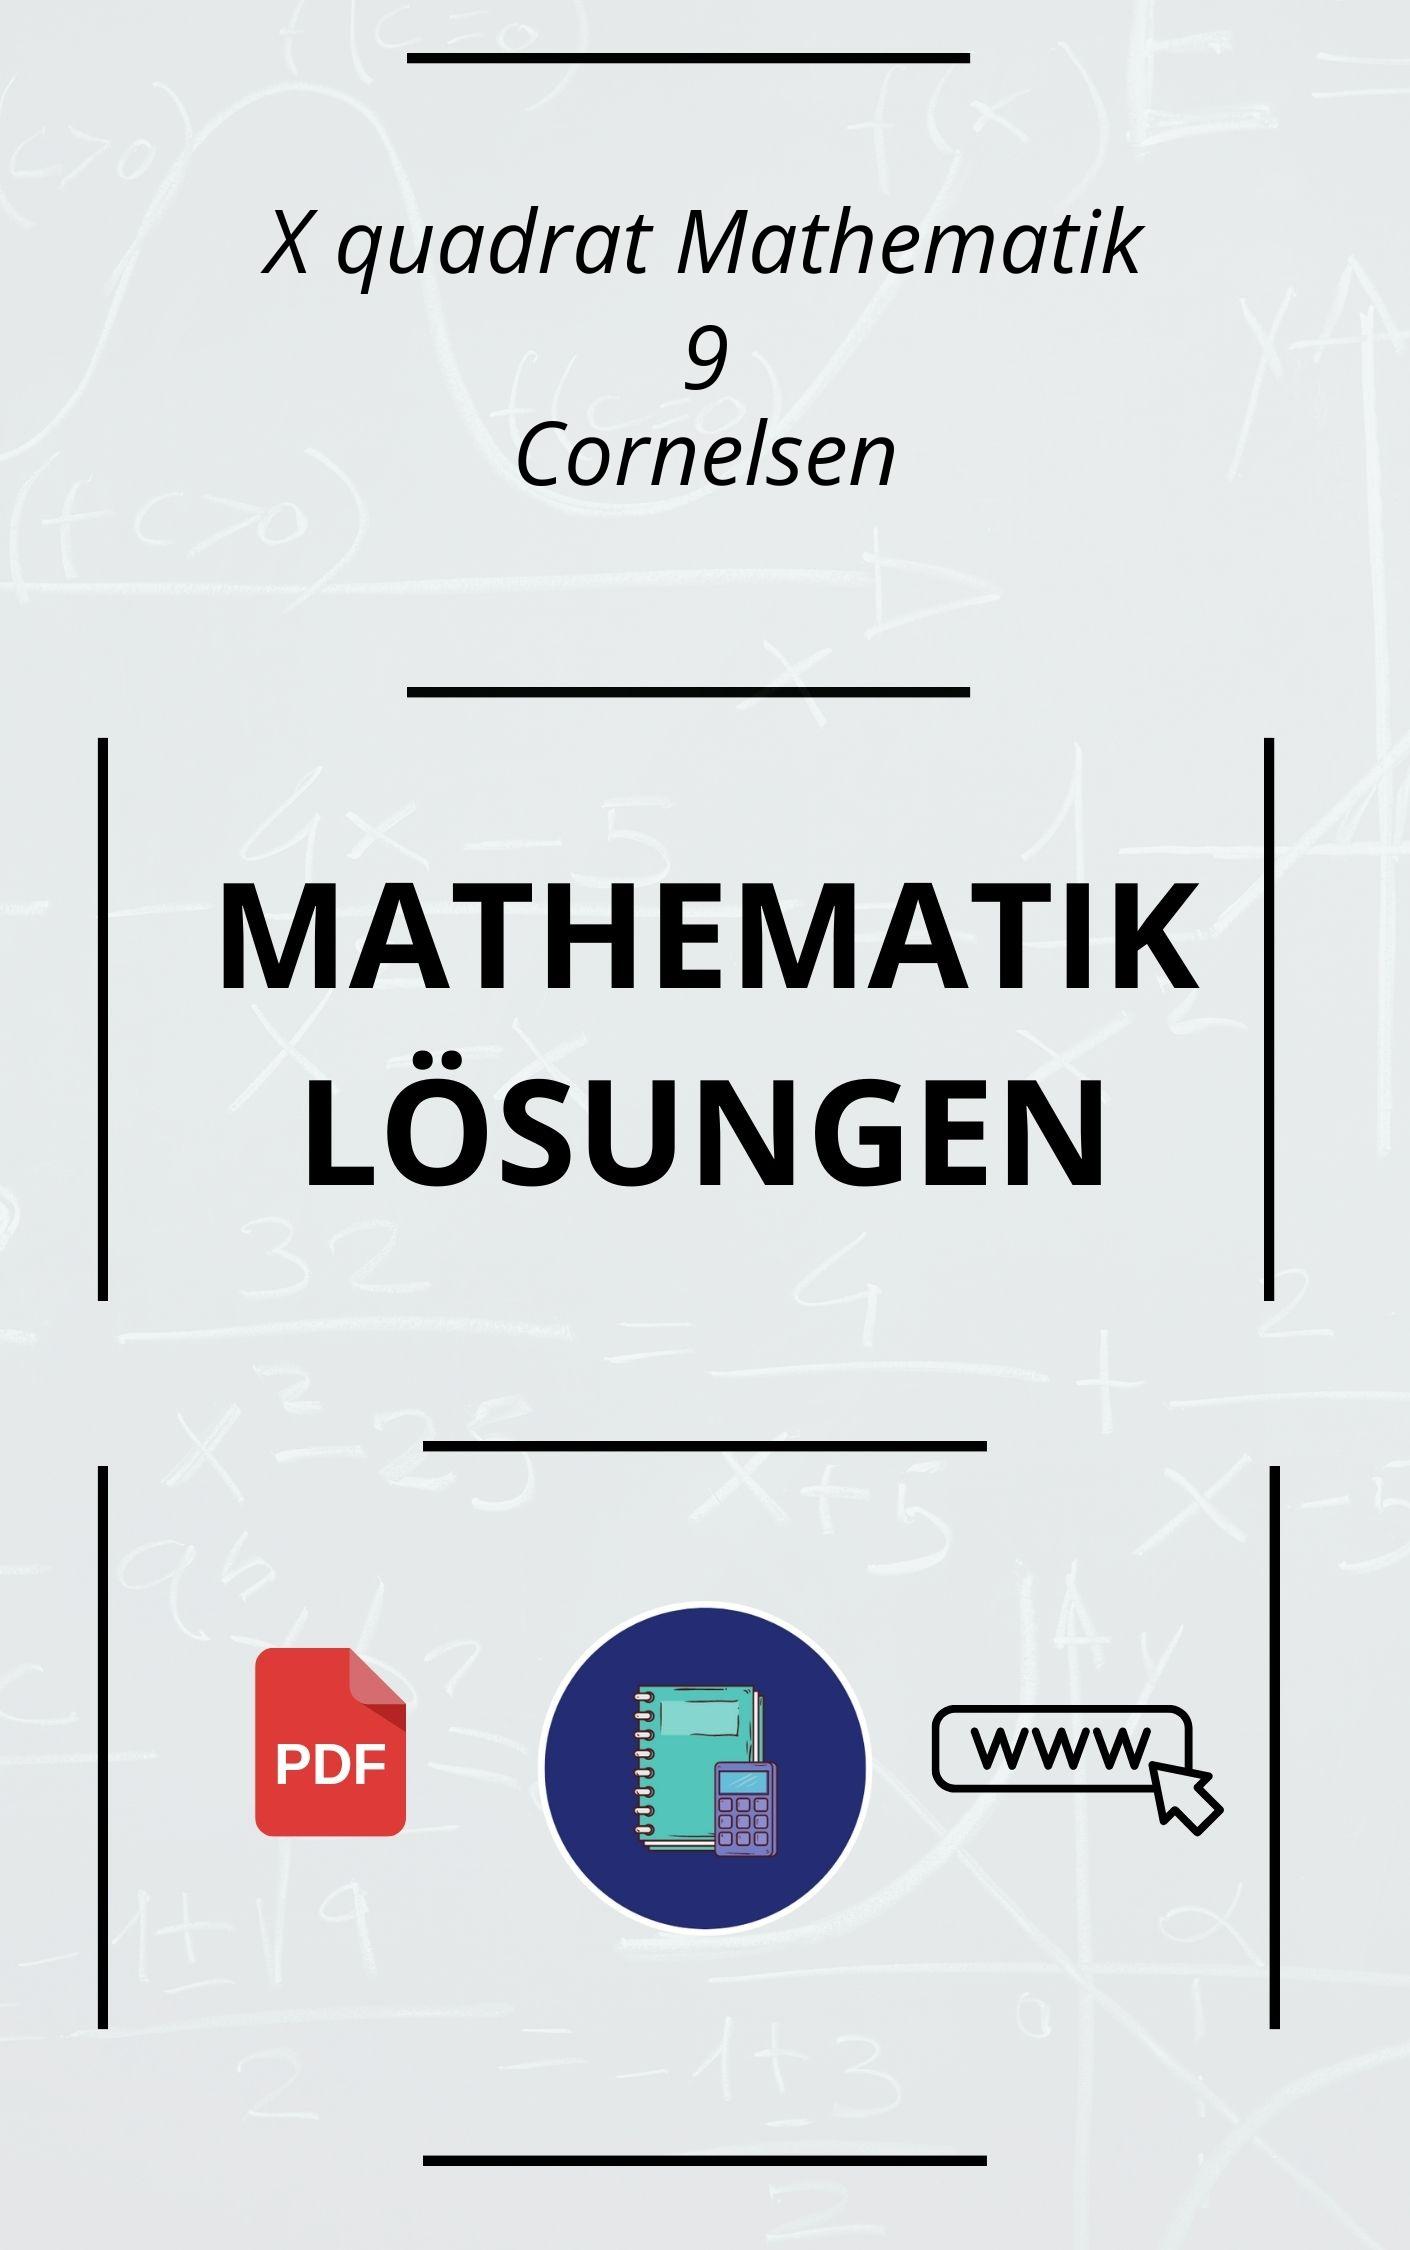 X quadrat Mathematik 9 Baden-württemberg Lösungen